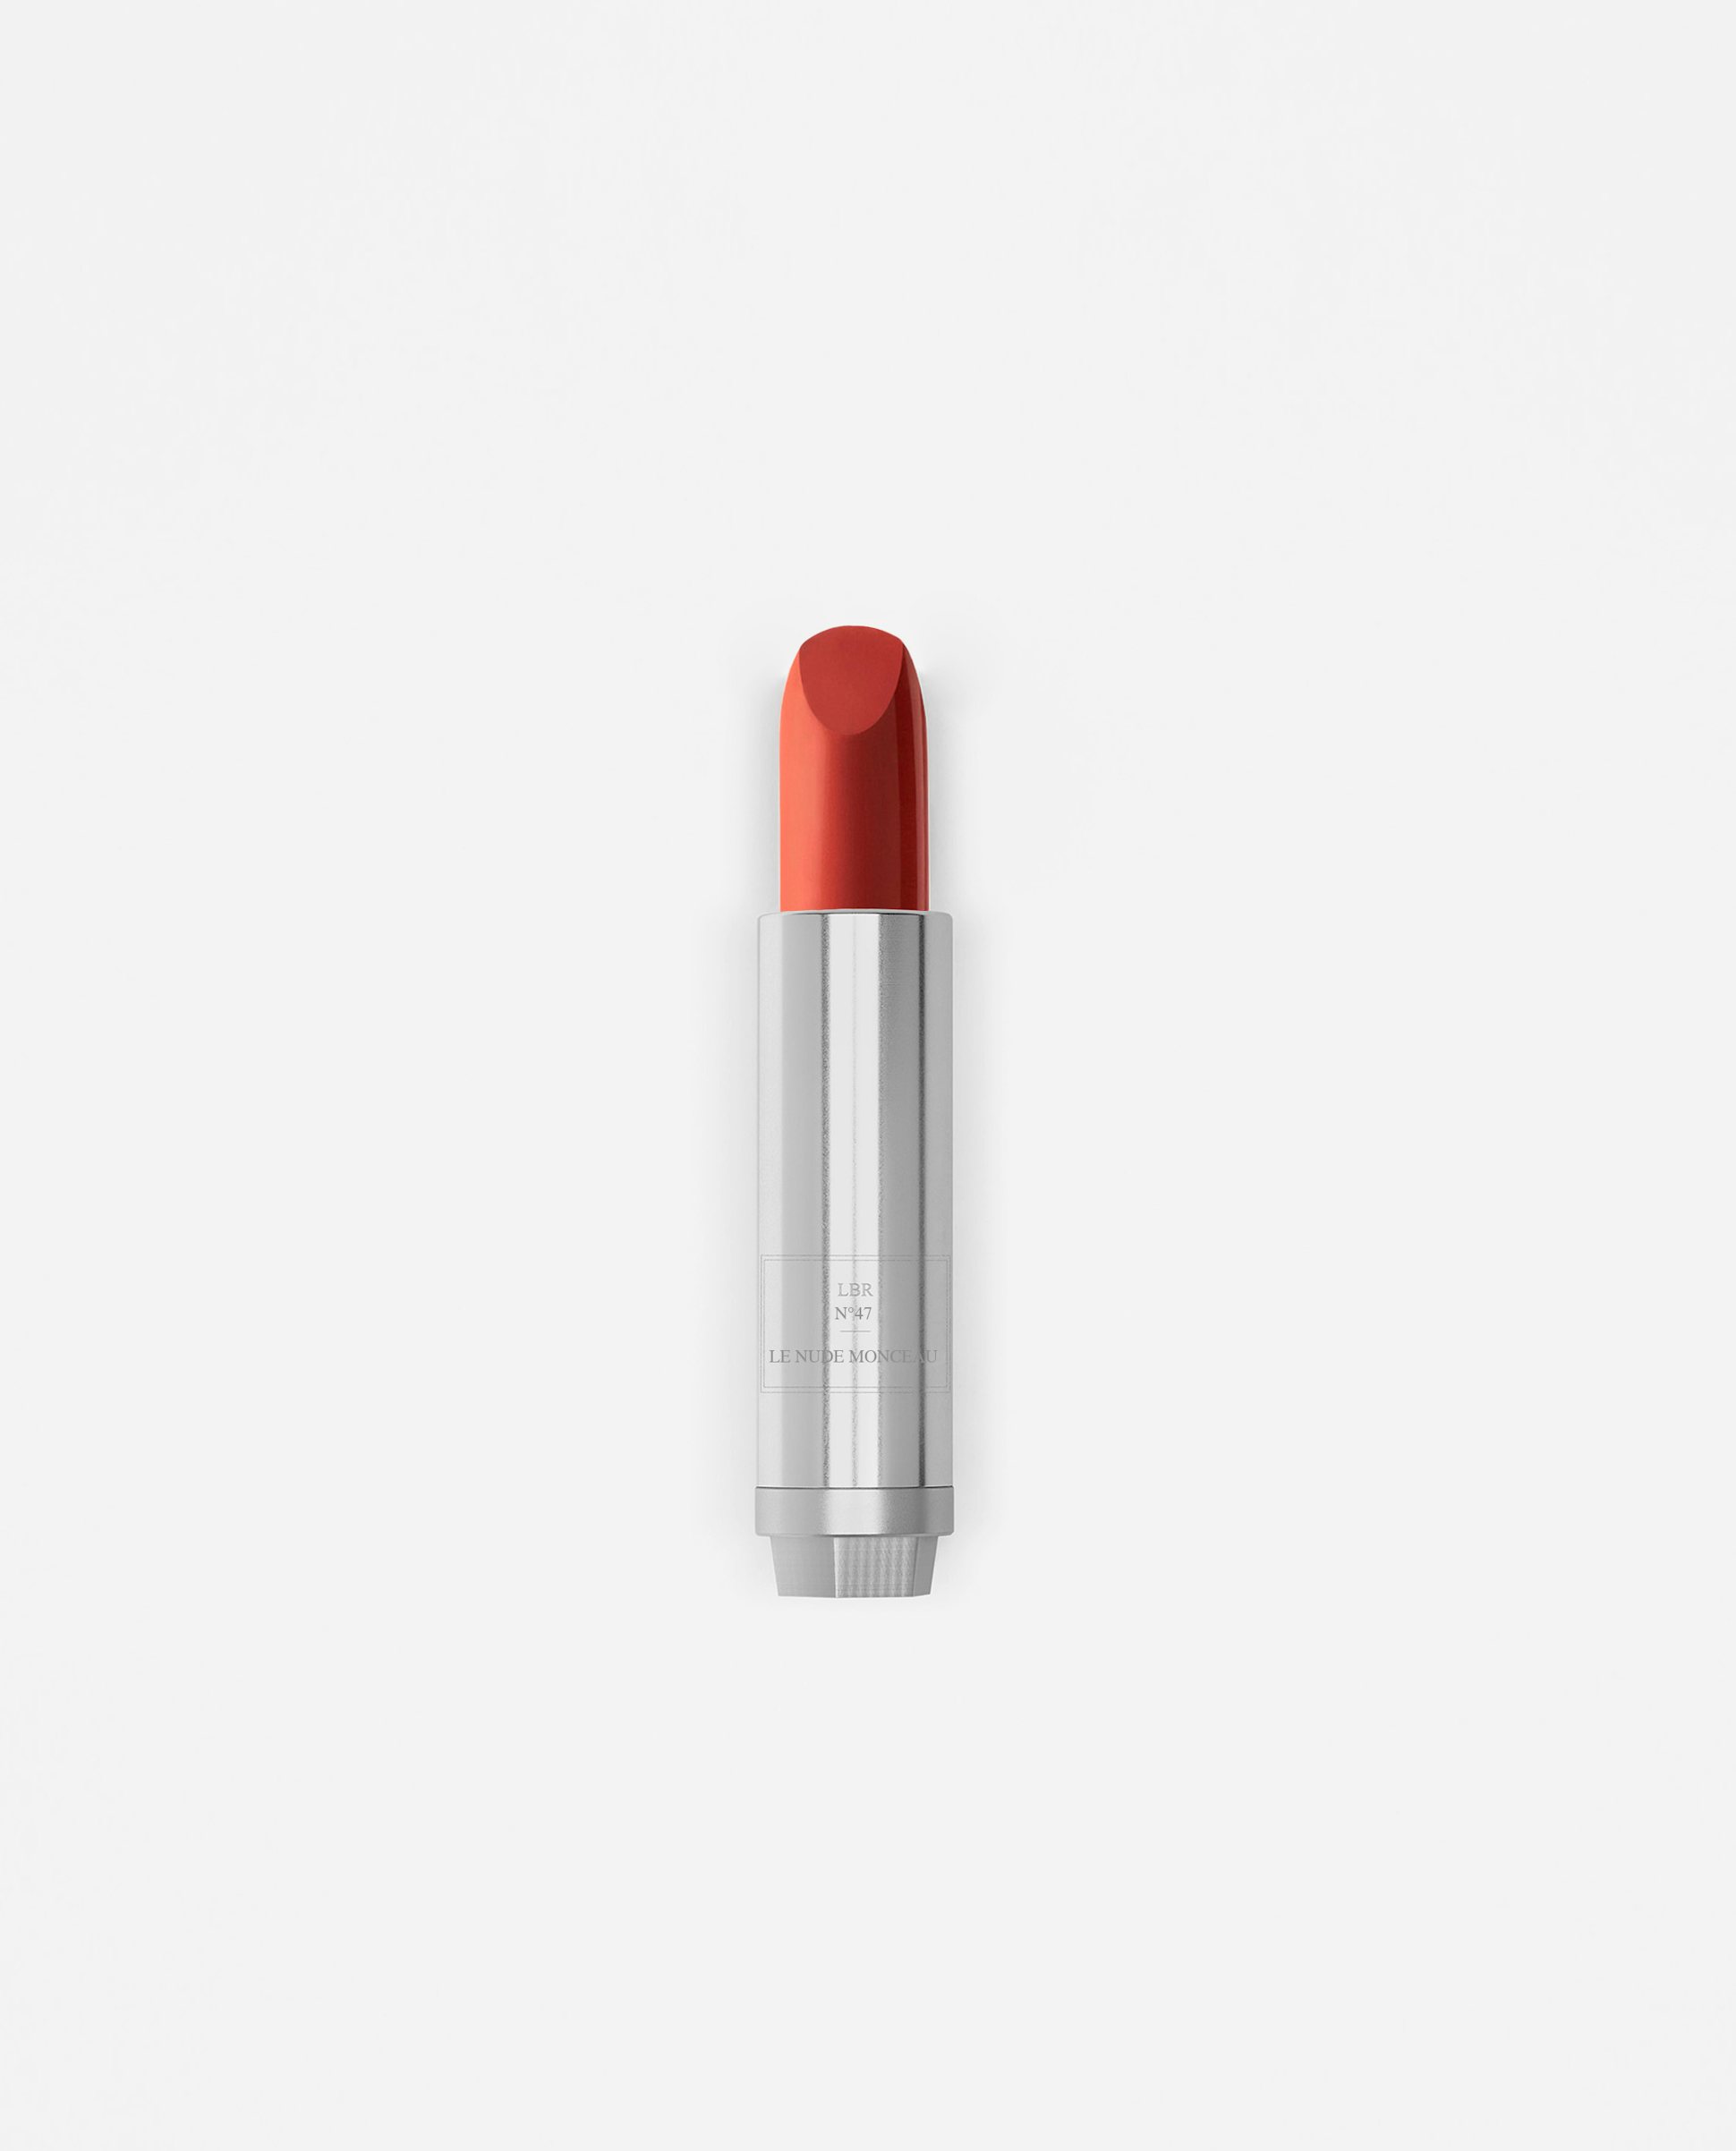 La bouche rouge Le Nude Monceau lipstick in metal refill